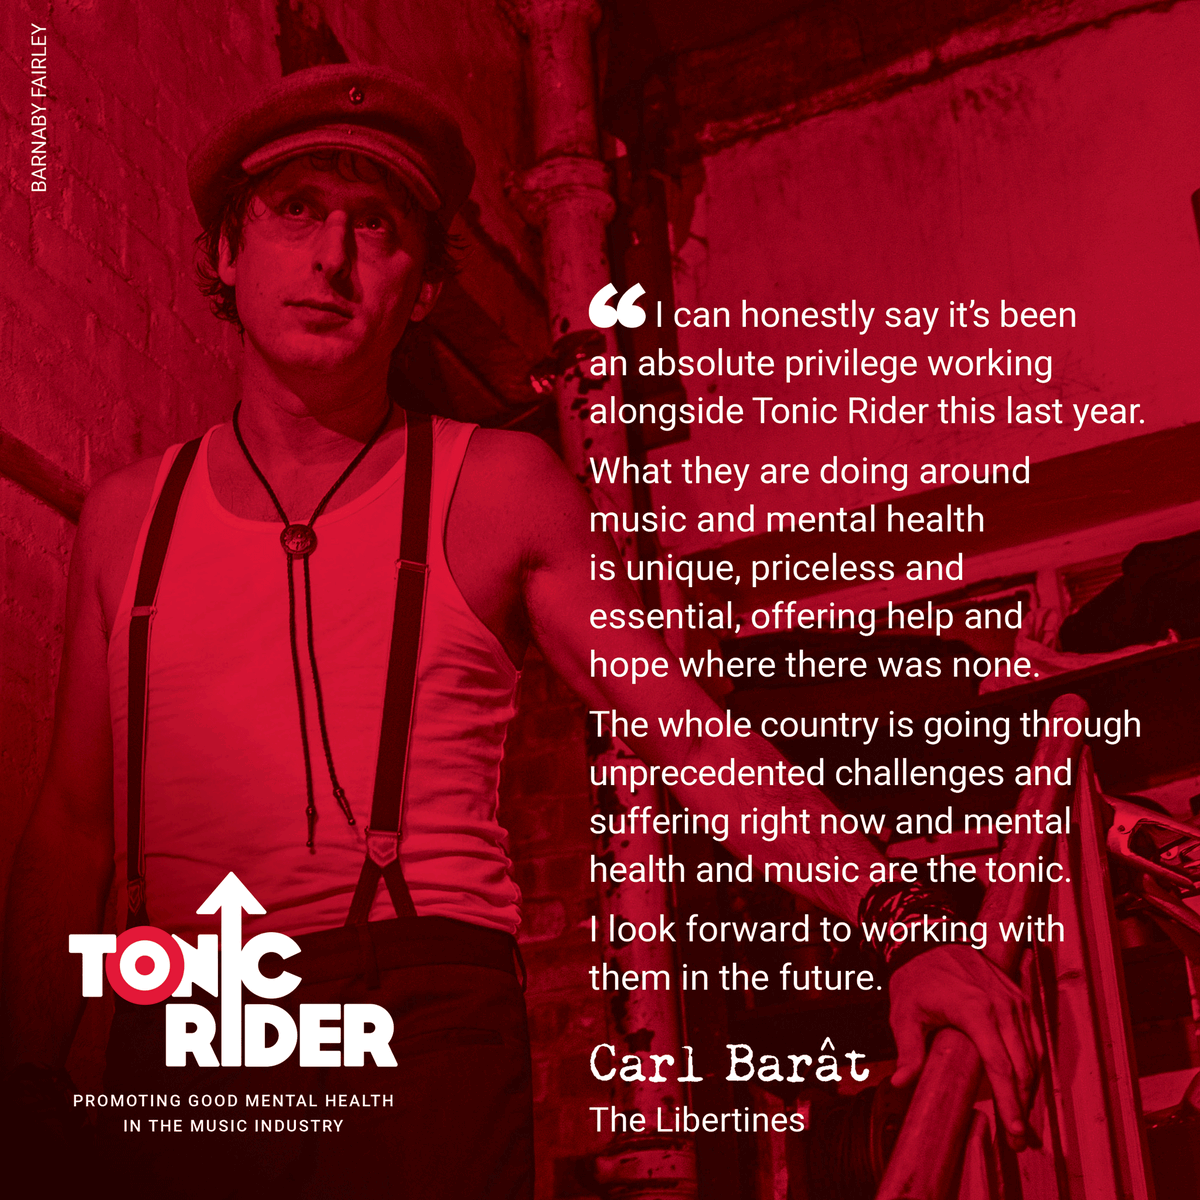 Carl Barât speaks about working alongside Tonic Rider.
#MentalHealth #Music #Tonic 
#TonicRider #NeverMindTheStigma
@carlbaratmusic
@libertines